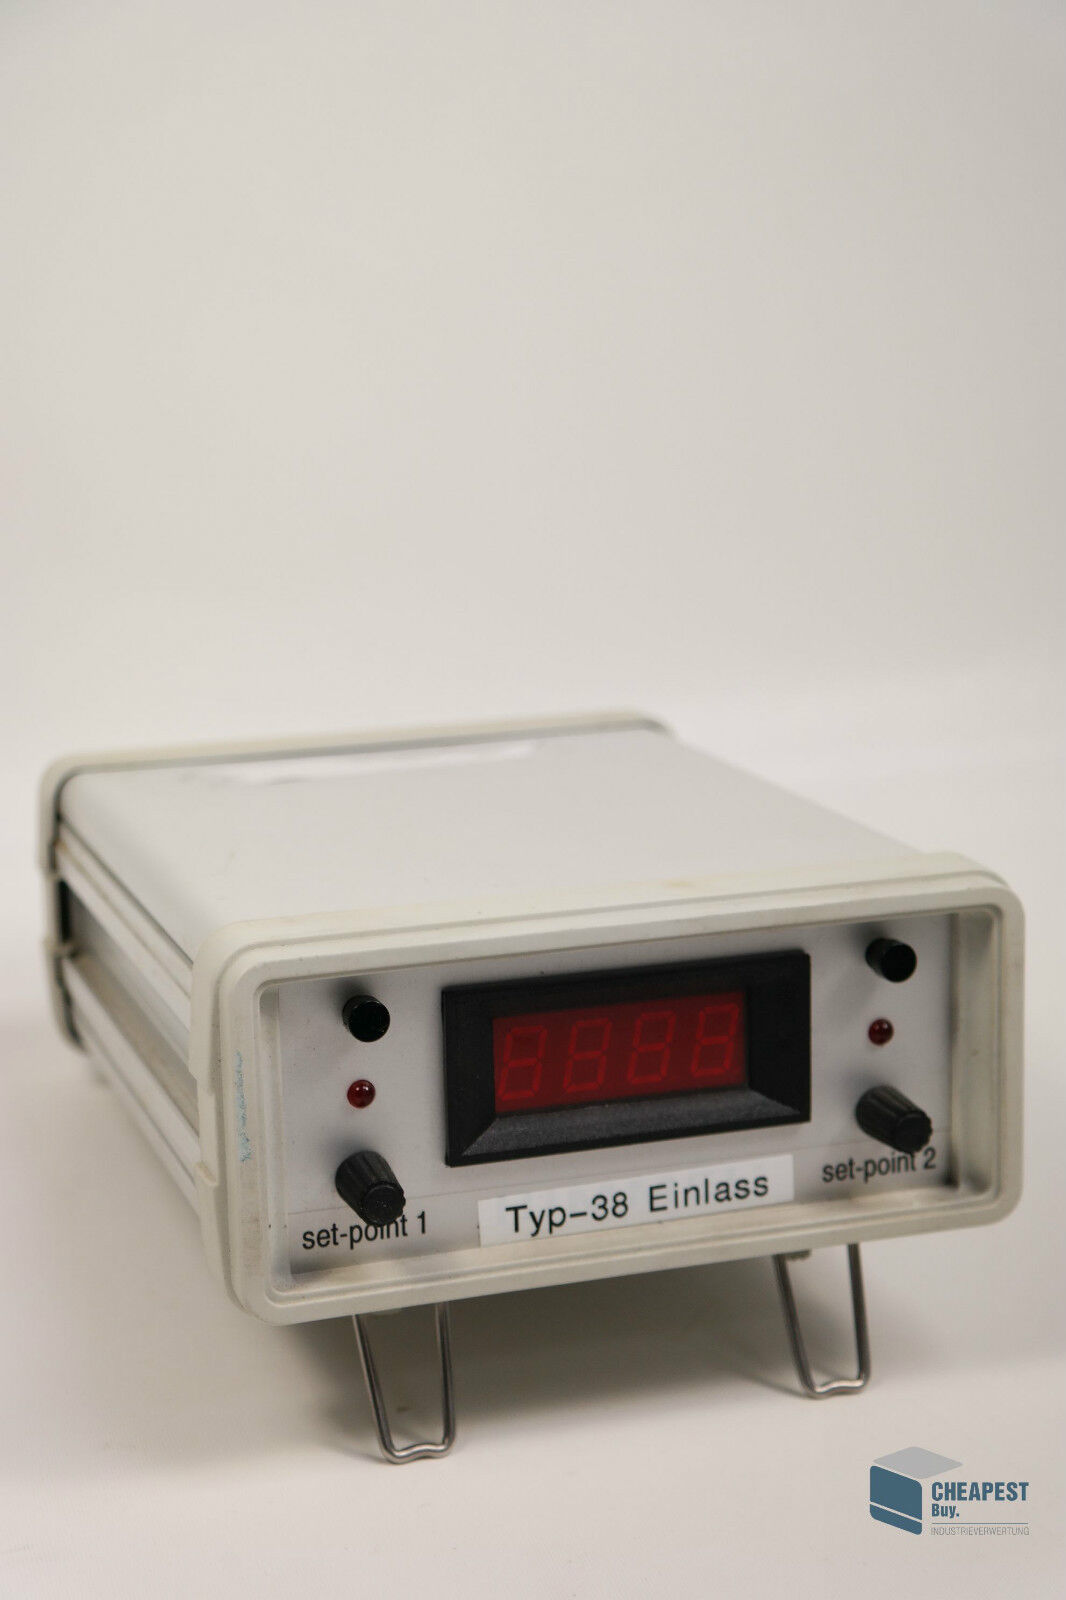 Himmelwerk AE1012 Auswerte-Elektronik Auswerteeinheit Measuring Range 100-752°